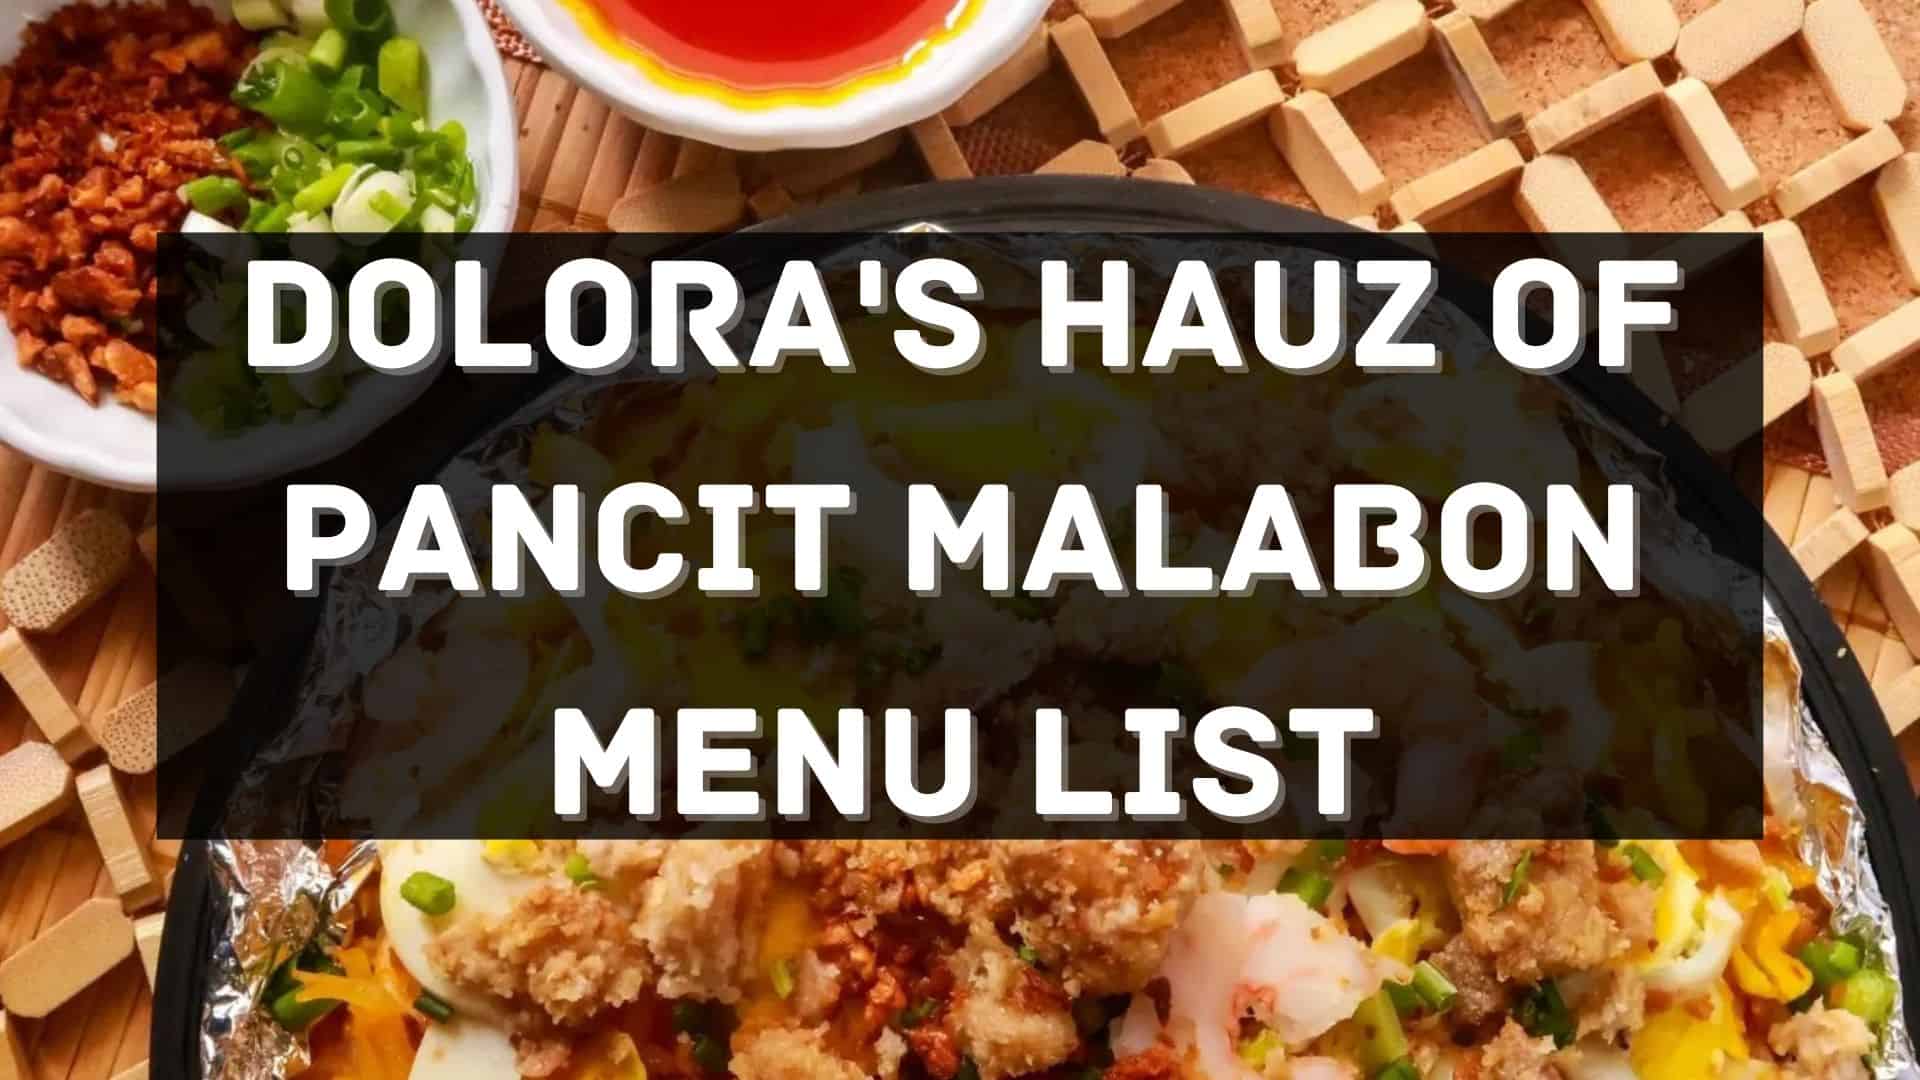 dolora's hauz of pancit malabon menu prices philippines